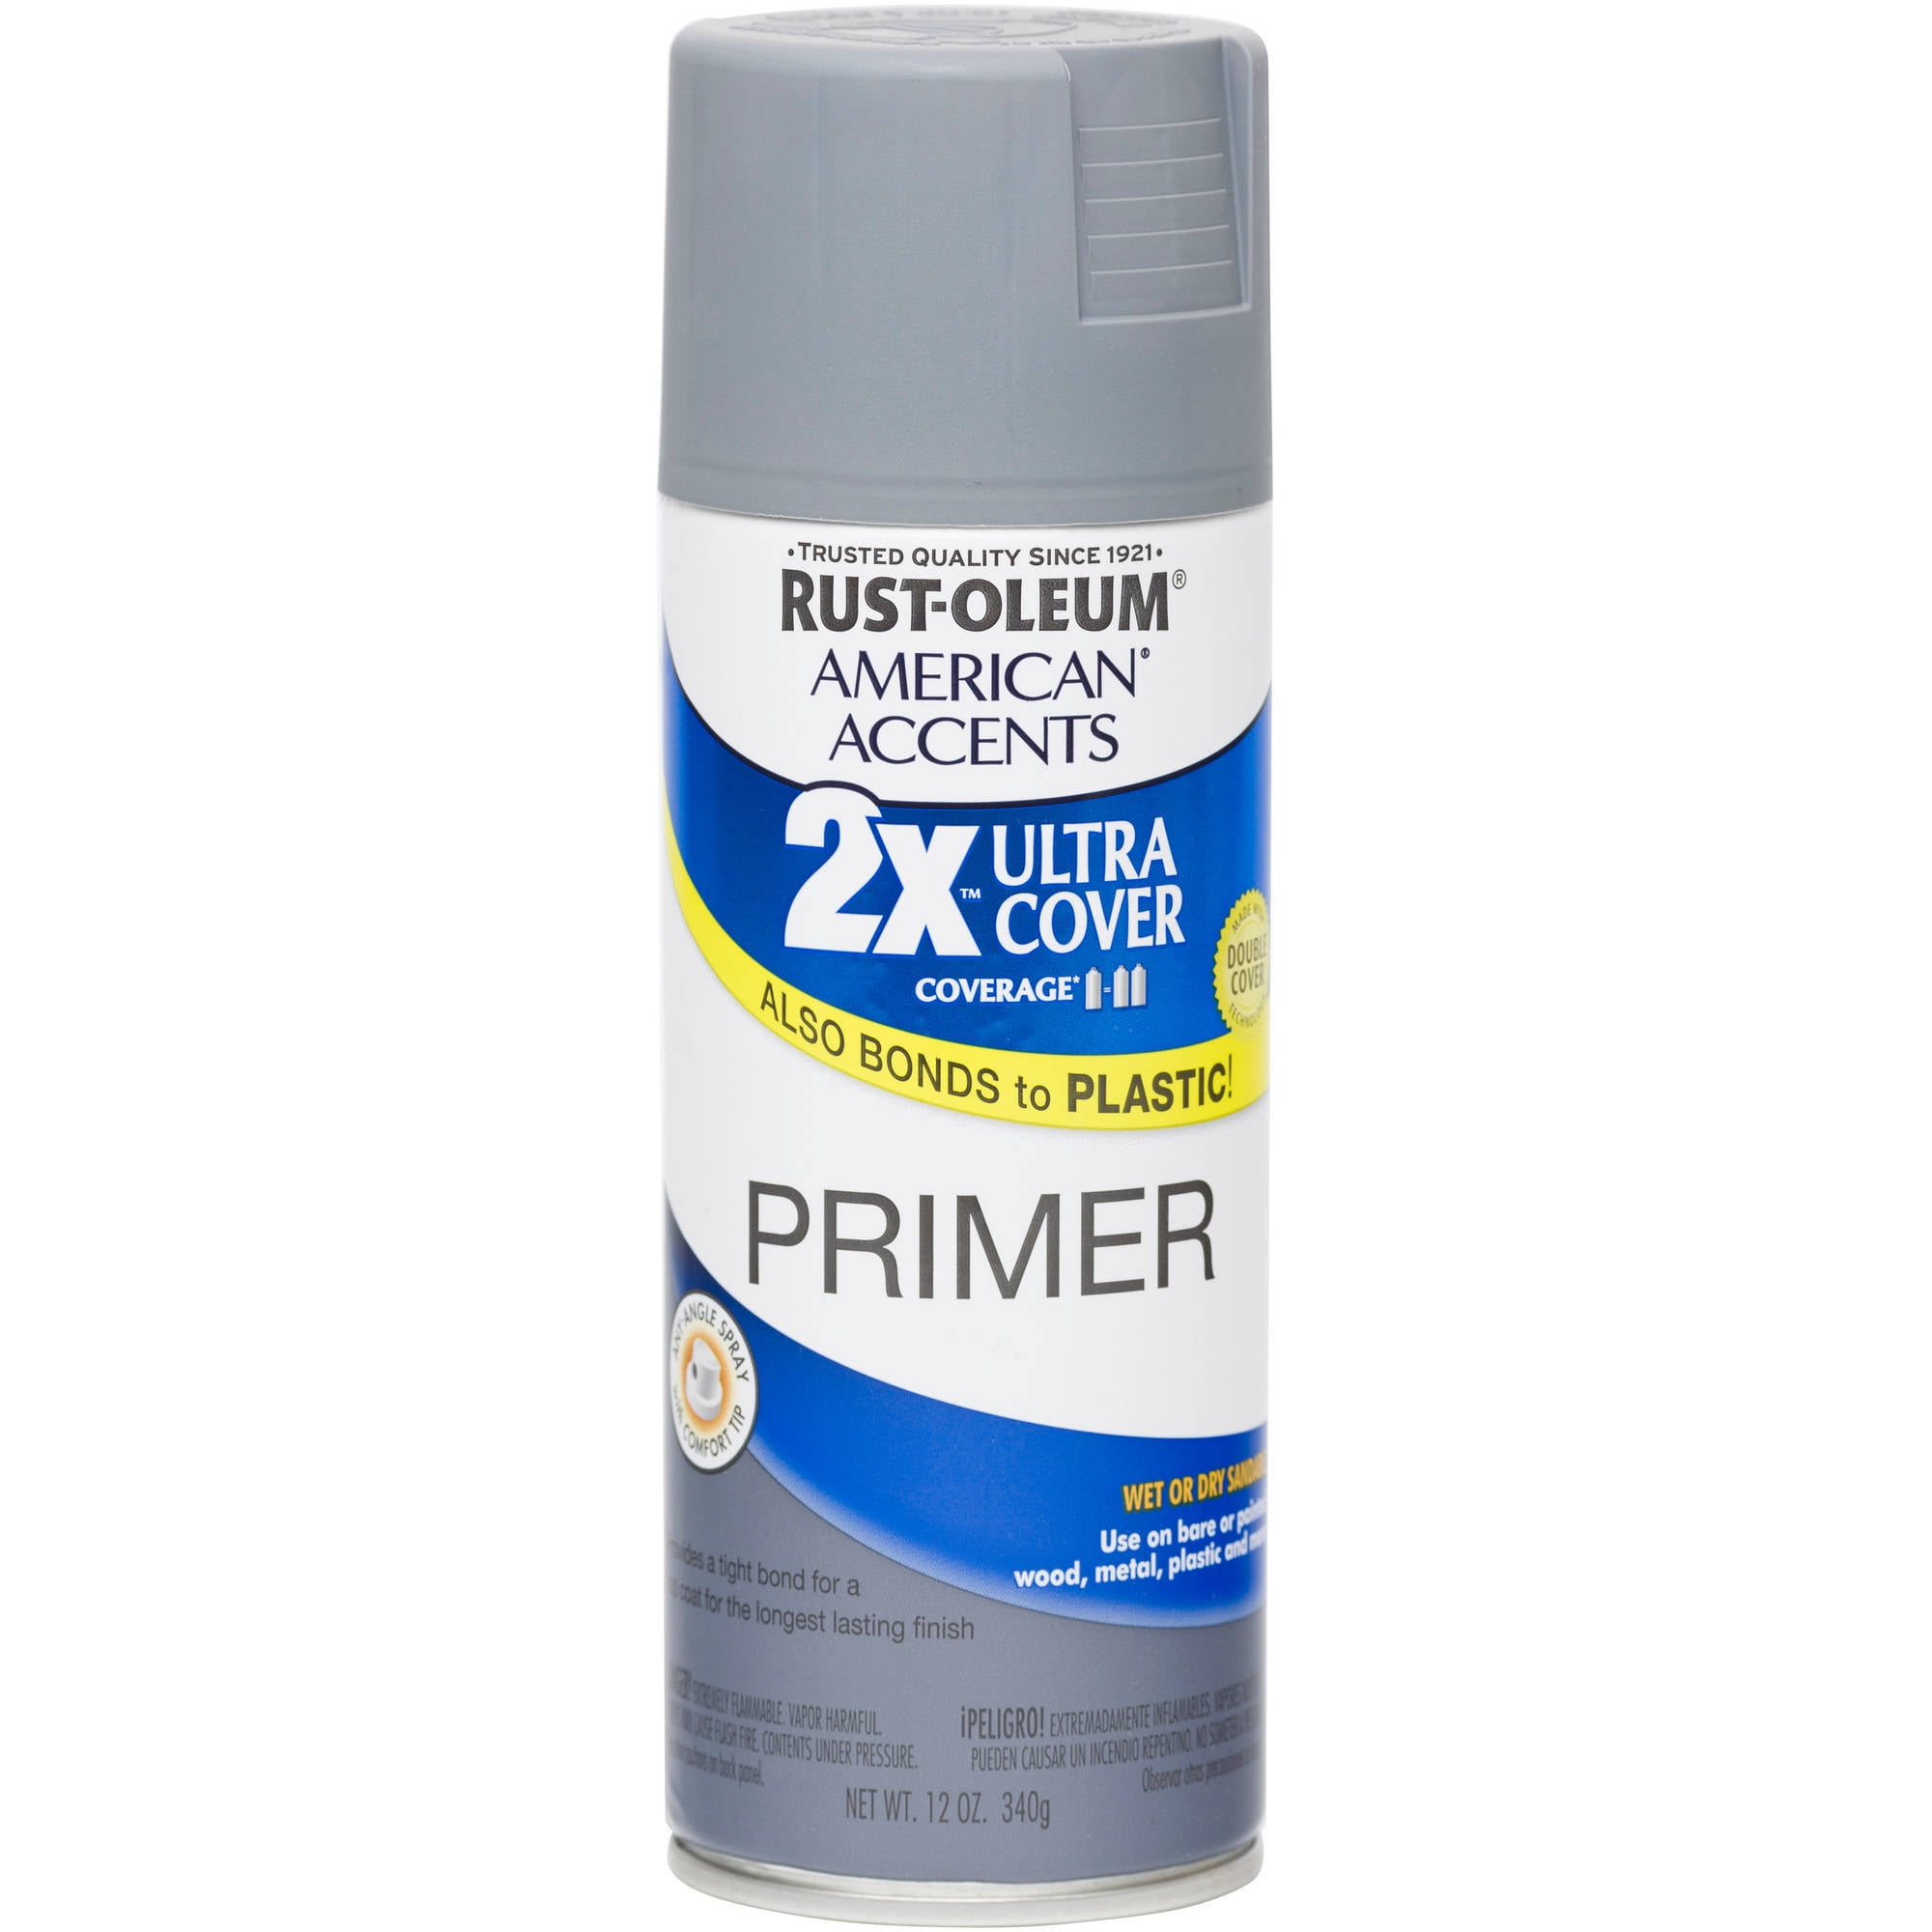 Rust-Oleum® 262662 Universal® Metallic Spray Paint & Primer, Dark Stee –  Toolbox Supply